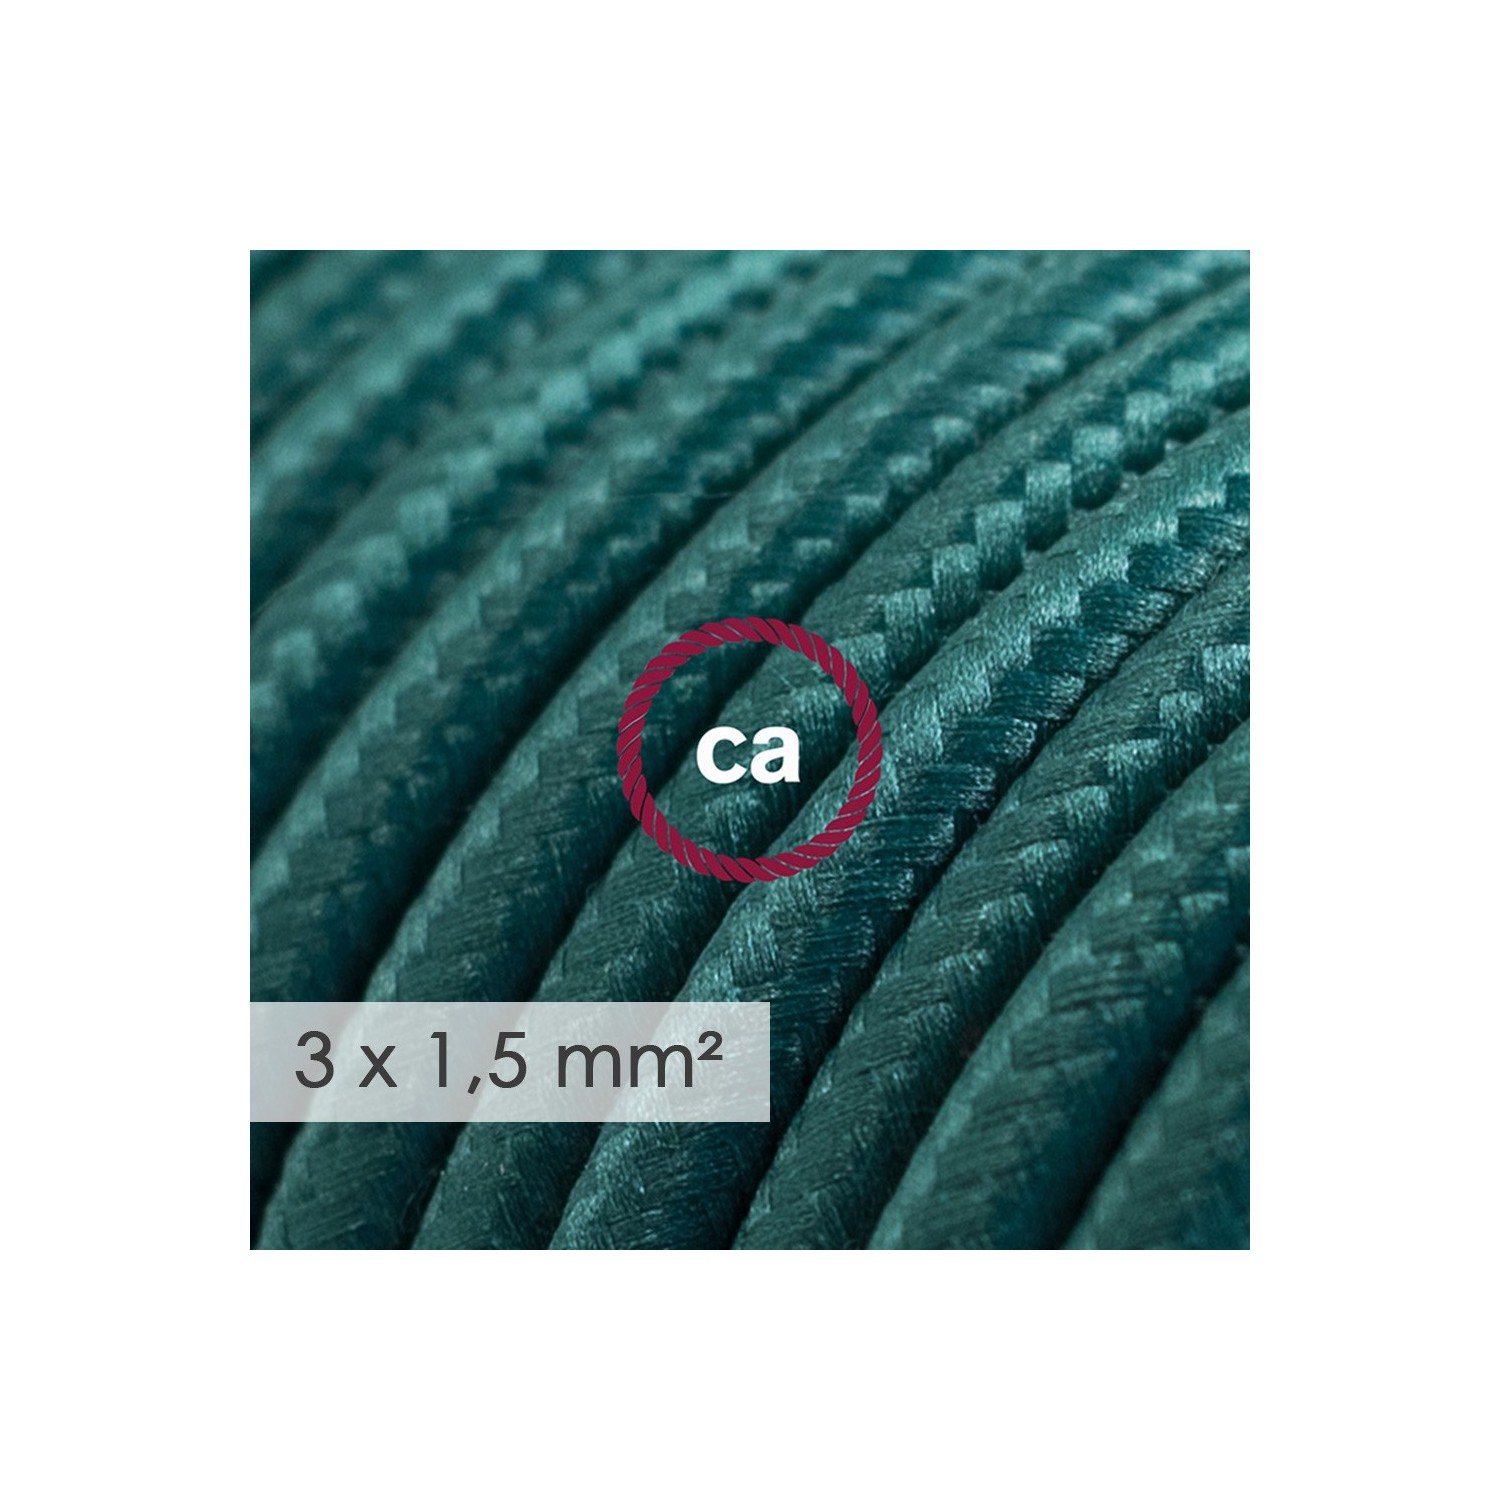 Prodlužovací textilný elektrický kabel - RM21 tmavě zelený - se 4 zásuvkami a Schuko zástrčkou.